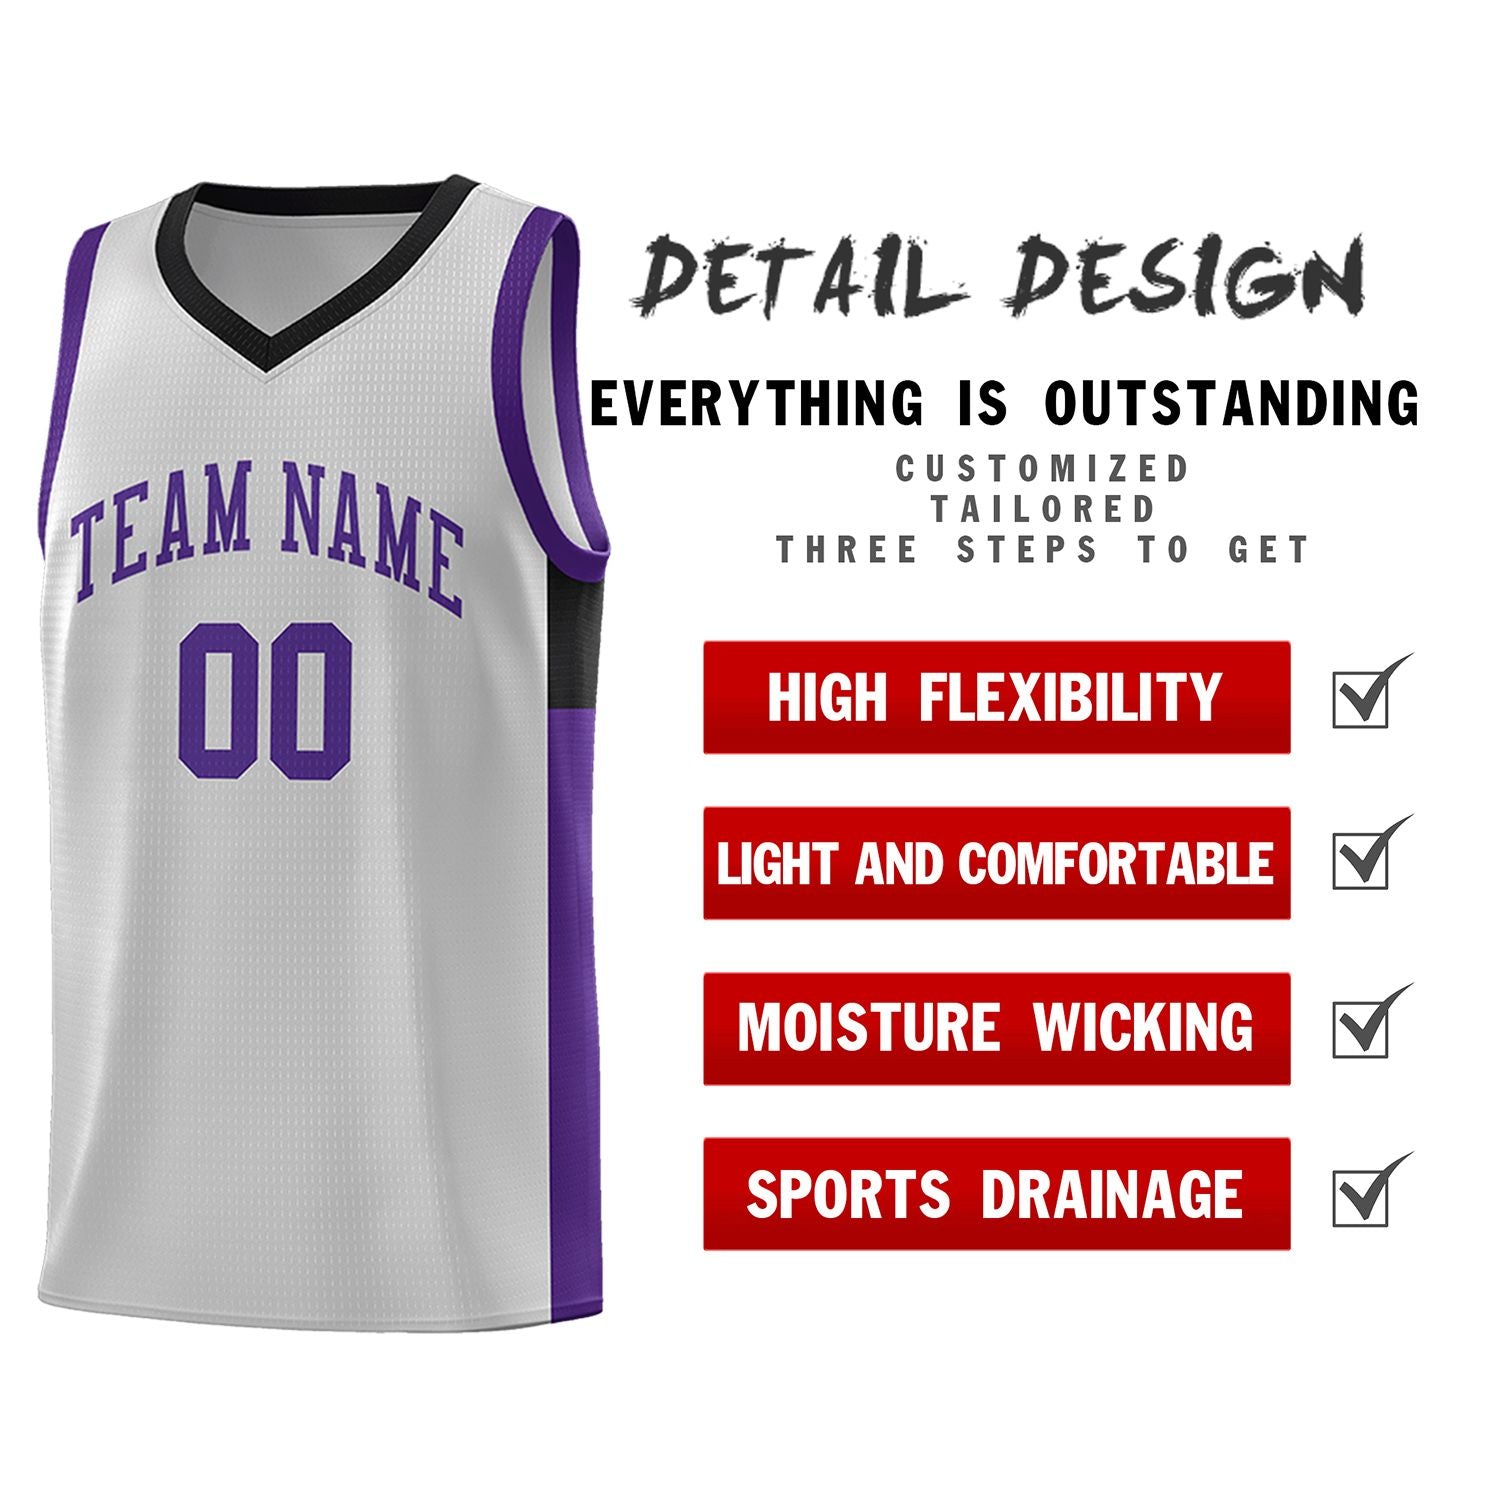 Custom Gray Purple-Black Side Two-Tone Classic Sports Uniform Basketball Jersey